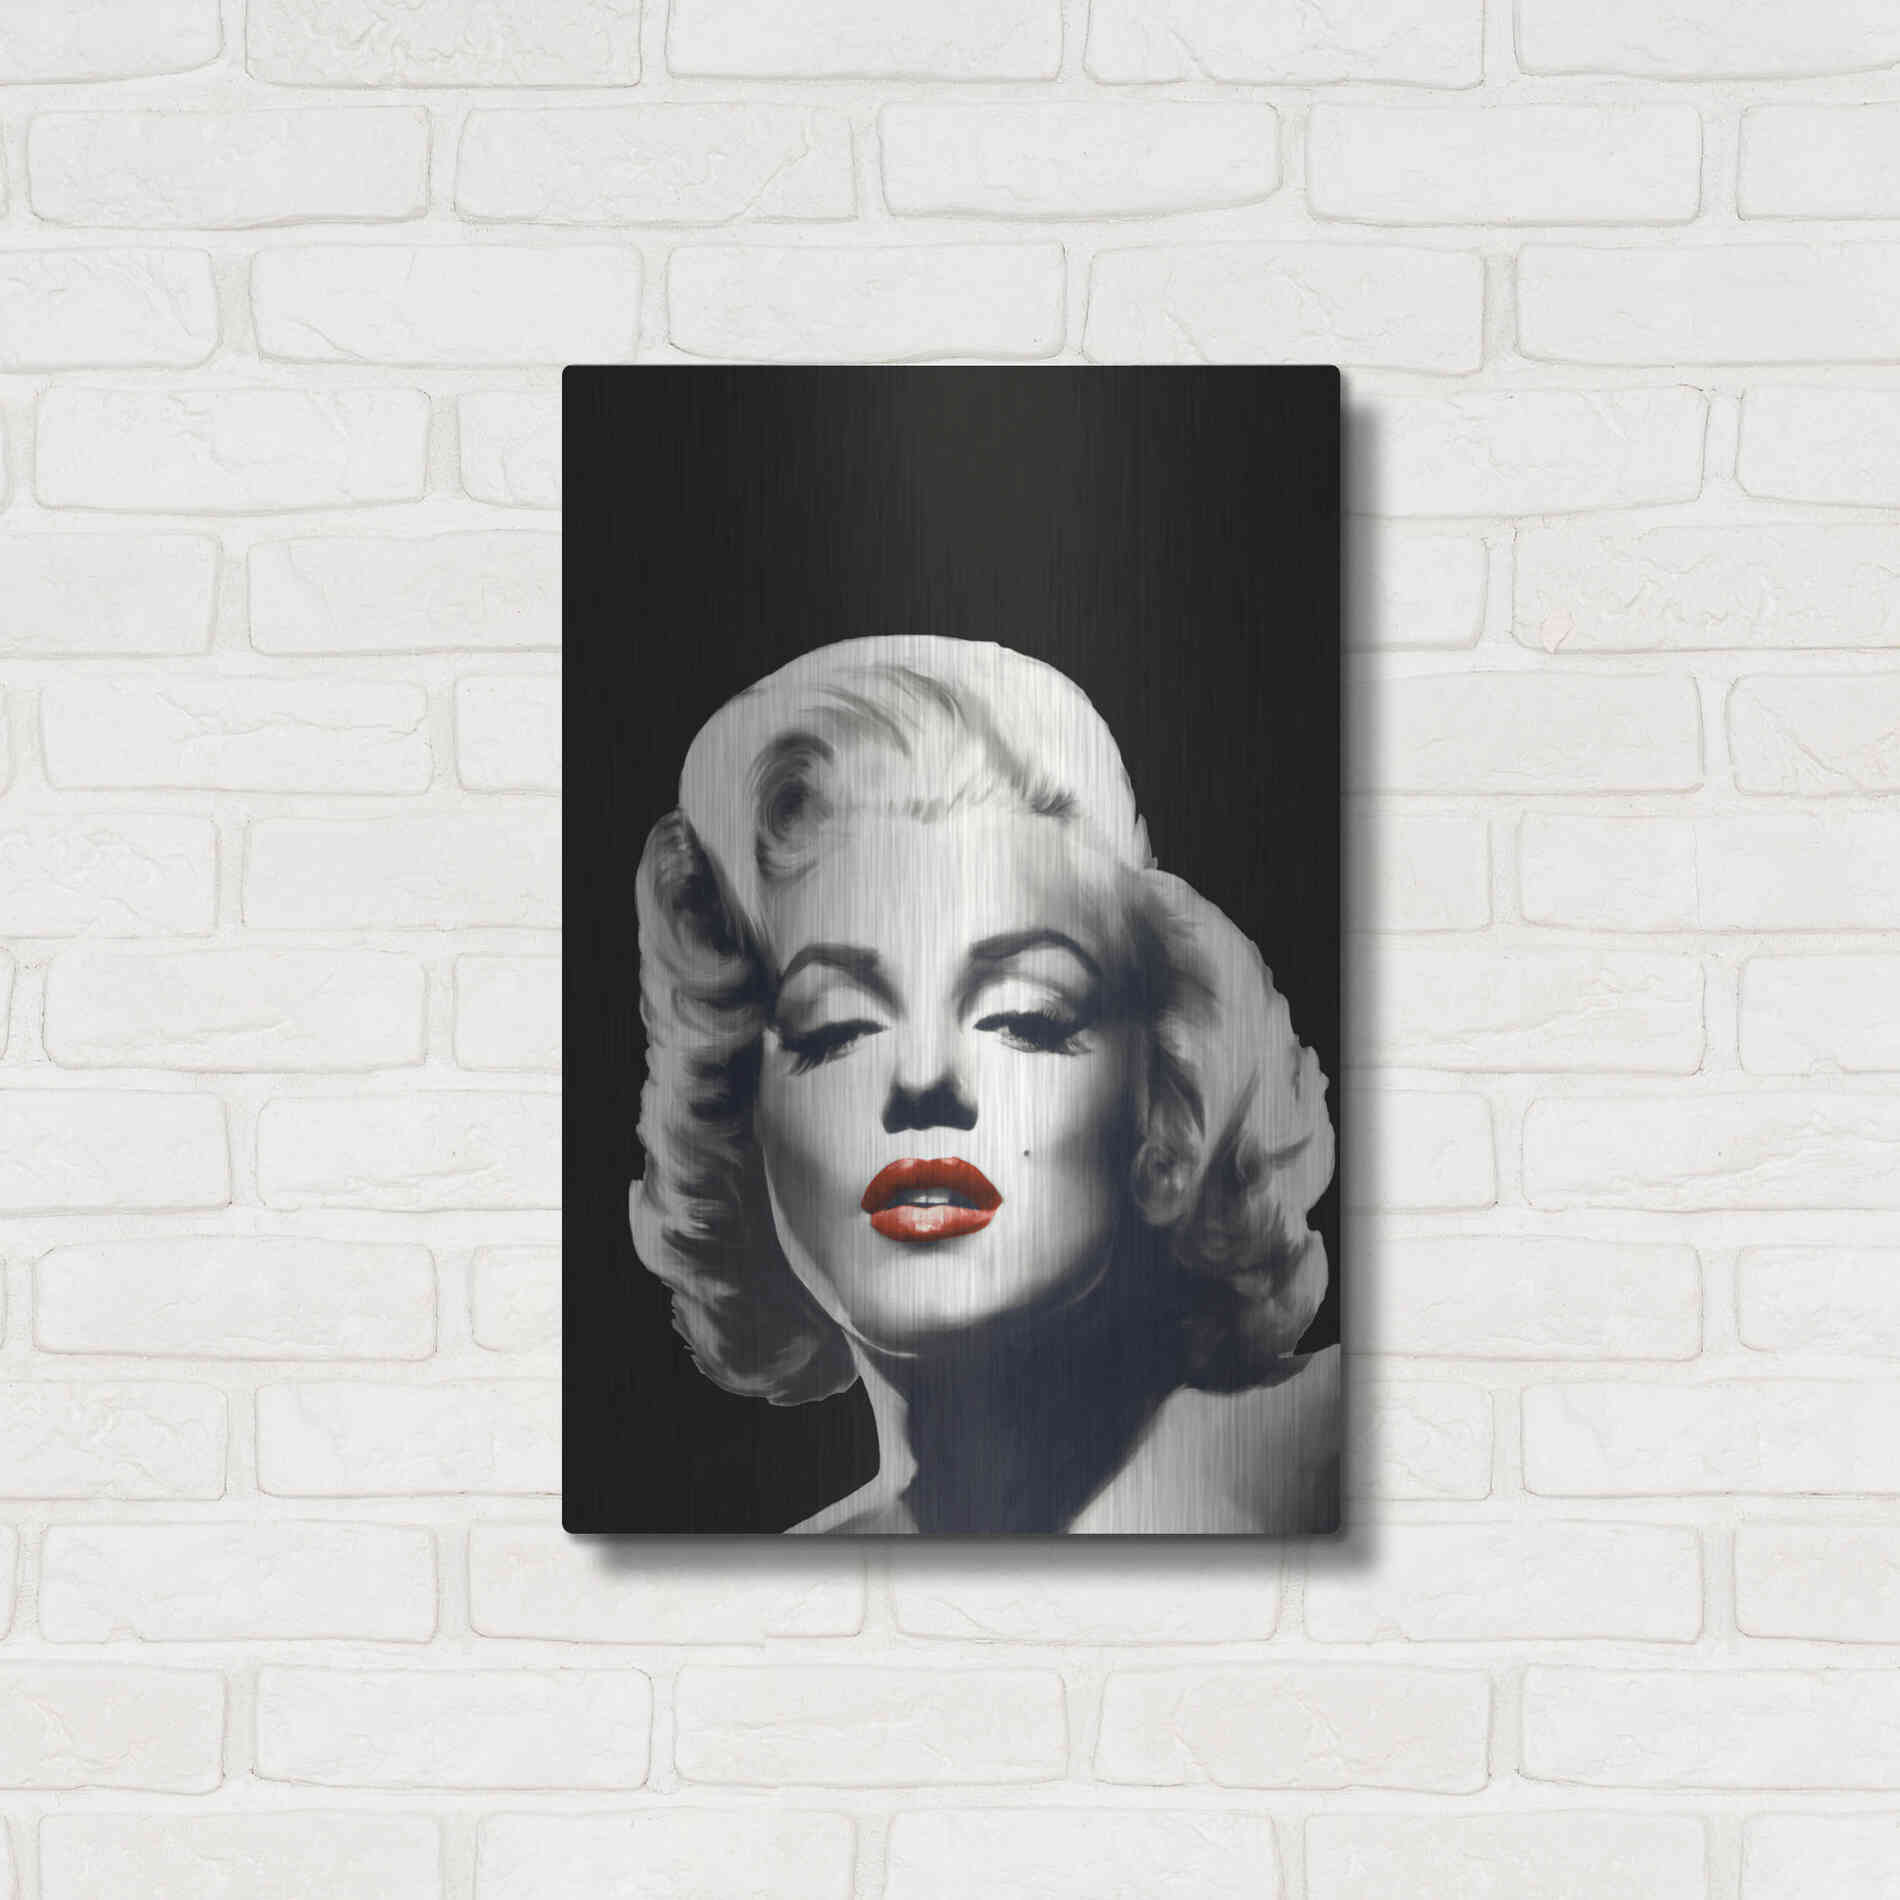 Luxe Metal Art 'Red Lips Marilyn In Black' by Chris Consani, Metal Wall Art,16x24